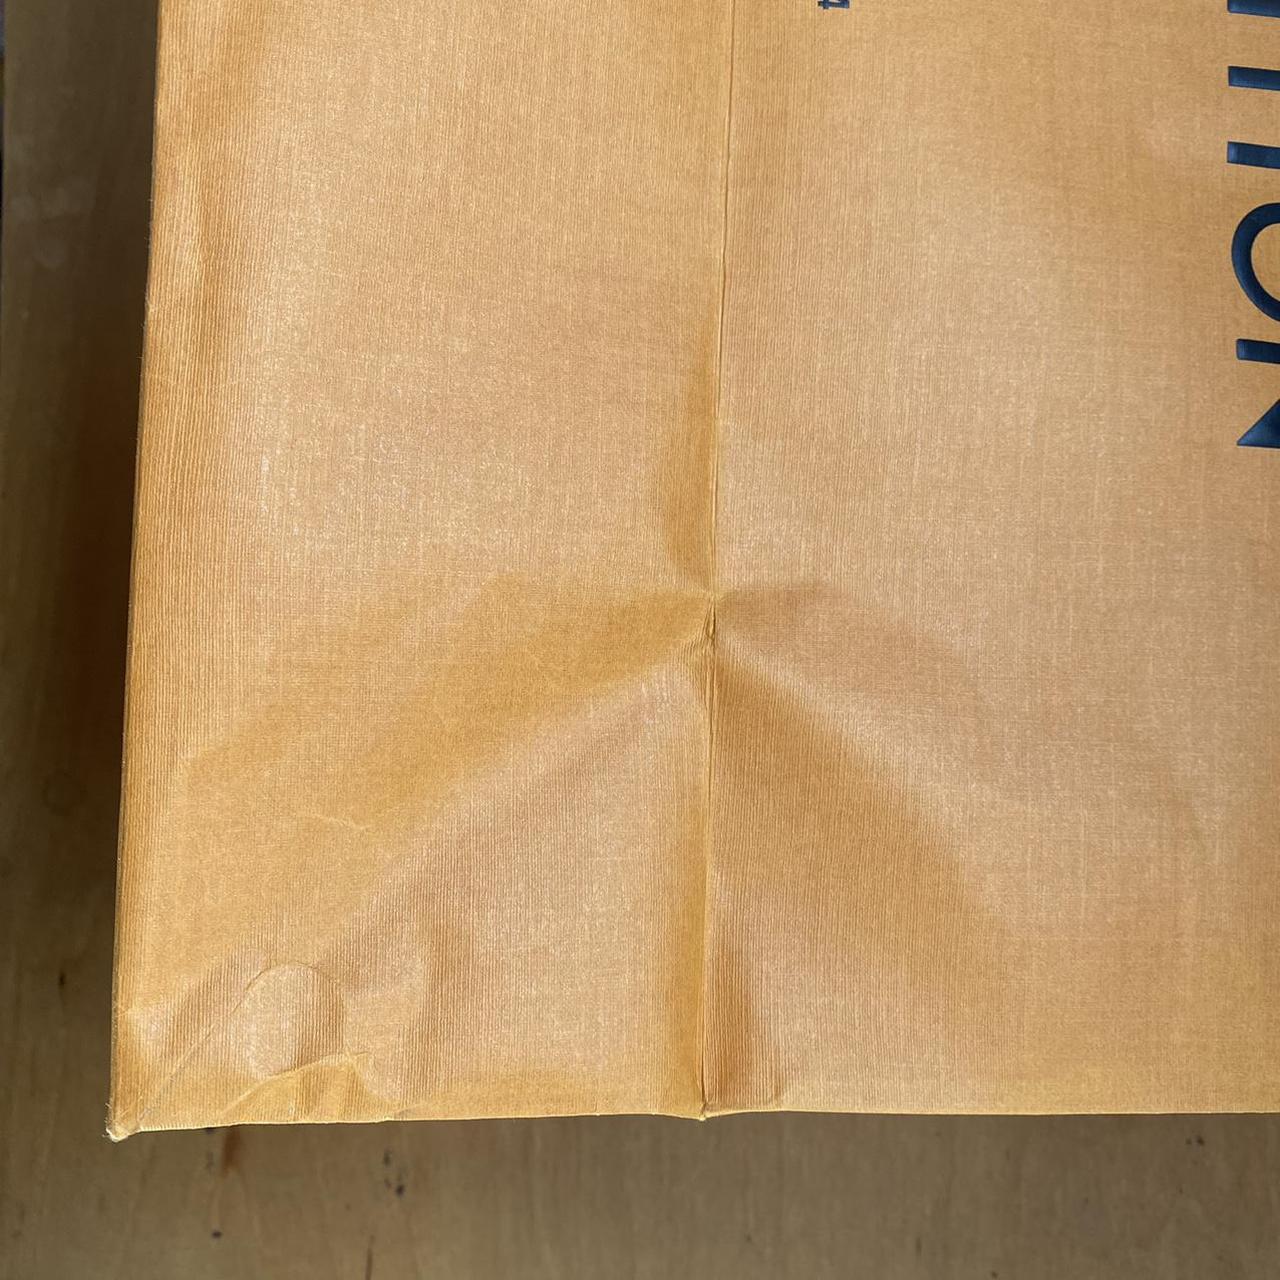 Louis voutton paper shopping 🛍 bag orange logo in black